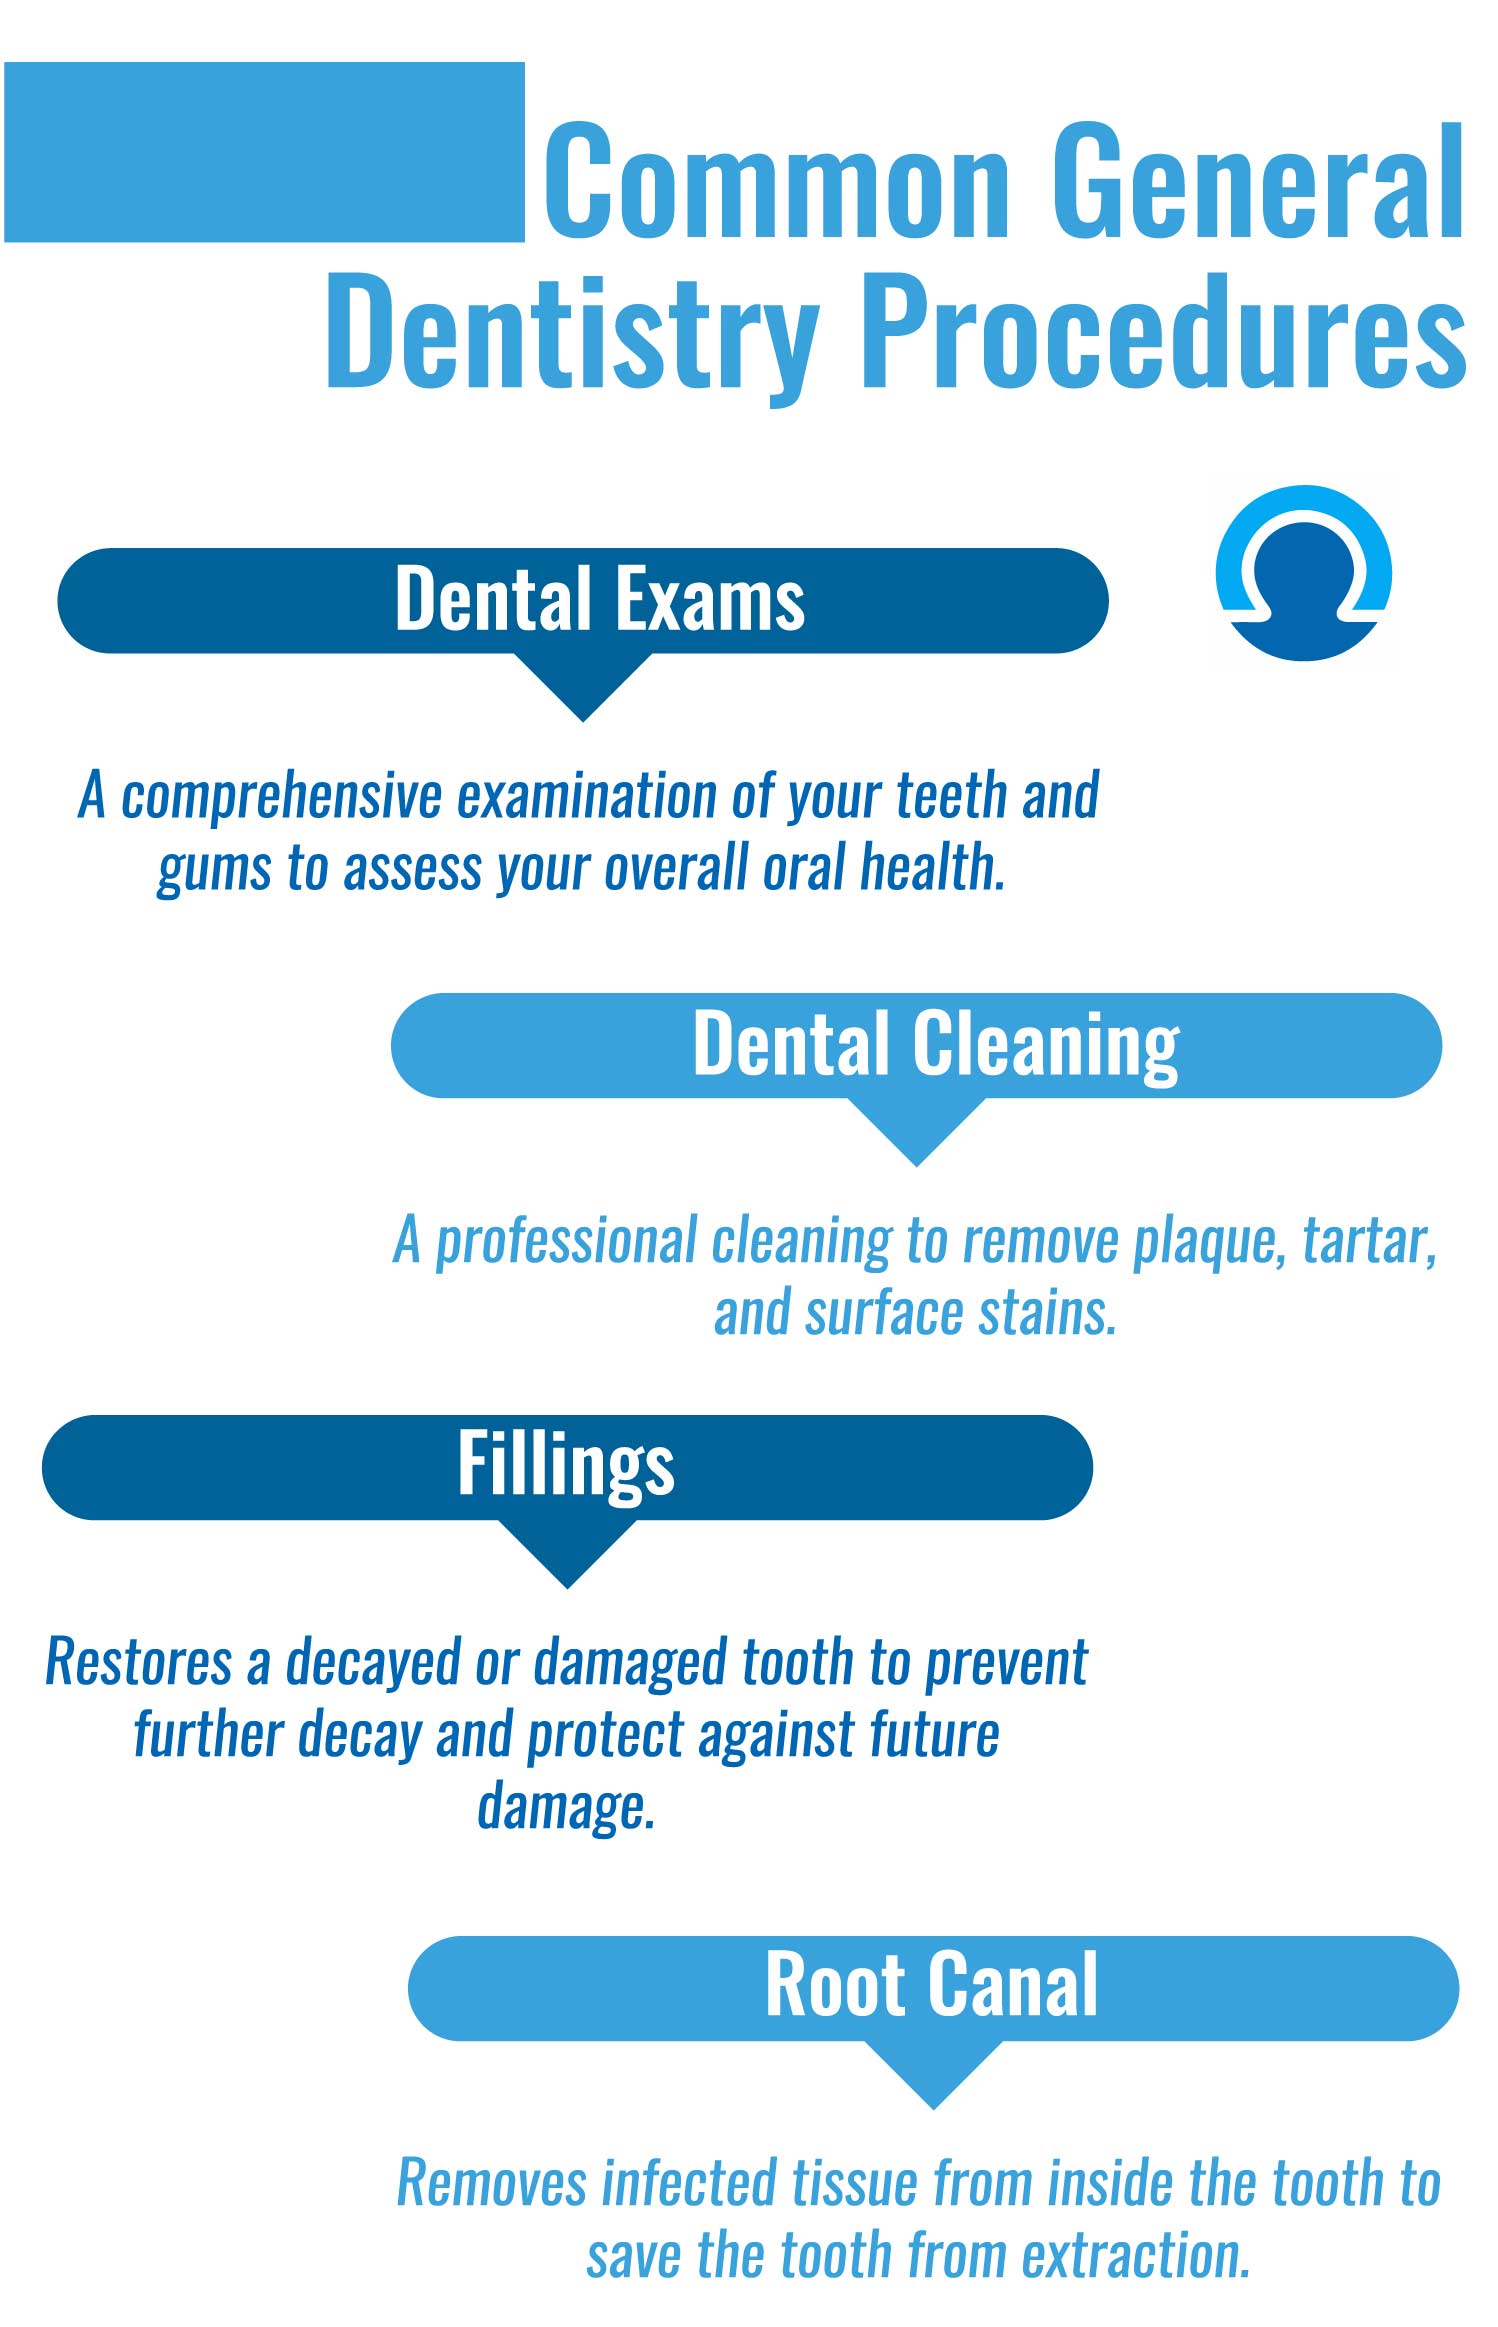 Common General Dentistry Procedures